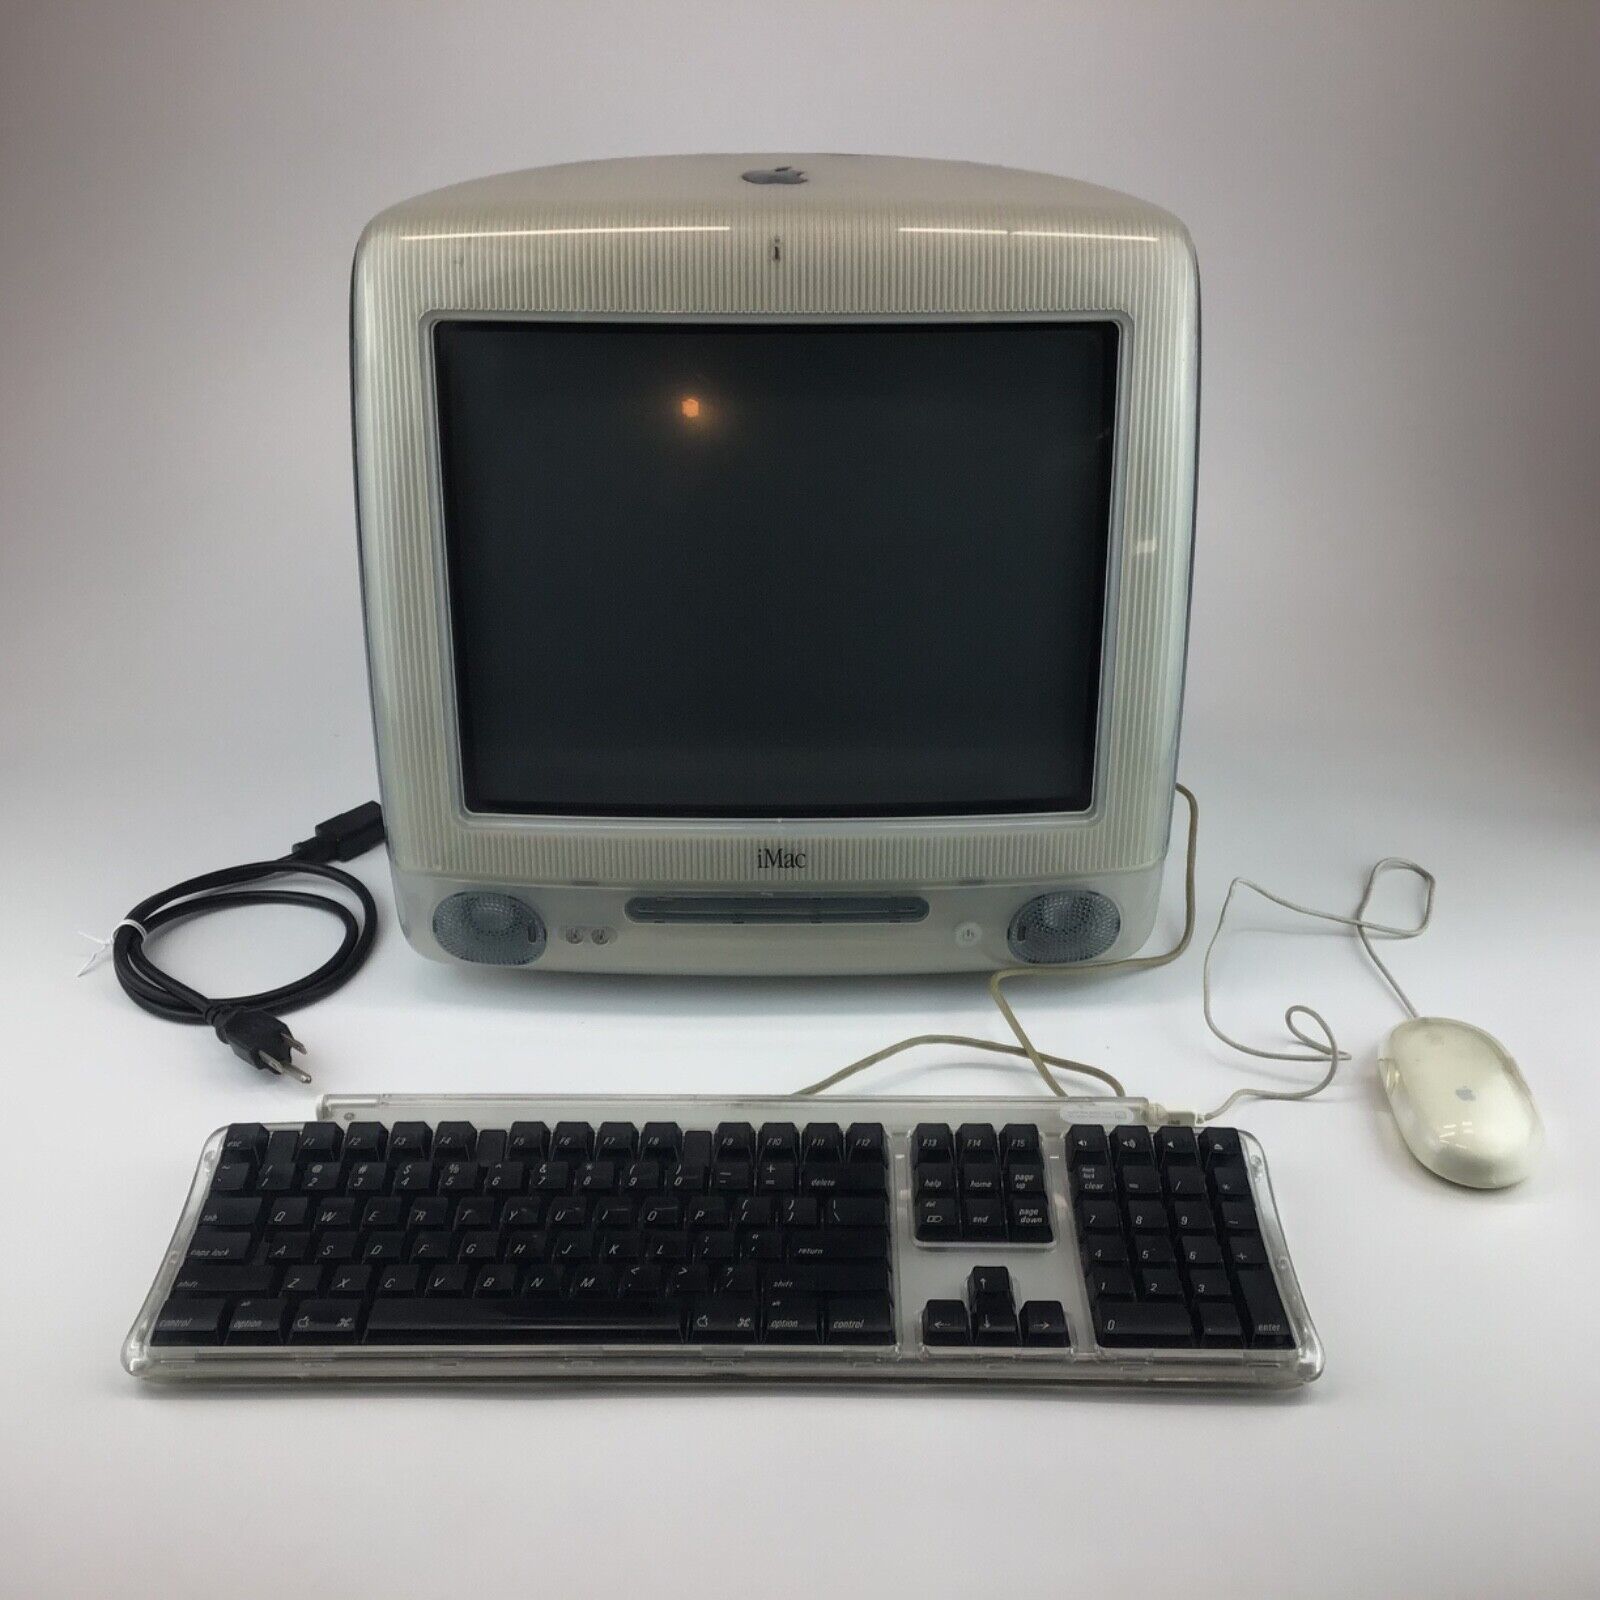 Apple iMac Blue M5521 Power PC Mac Macintosh Computer Works